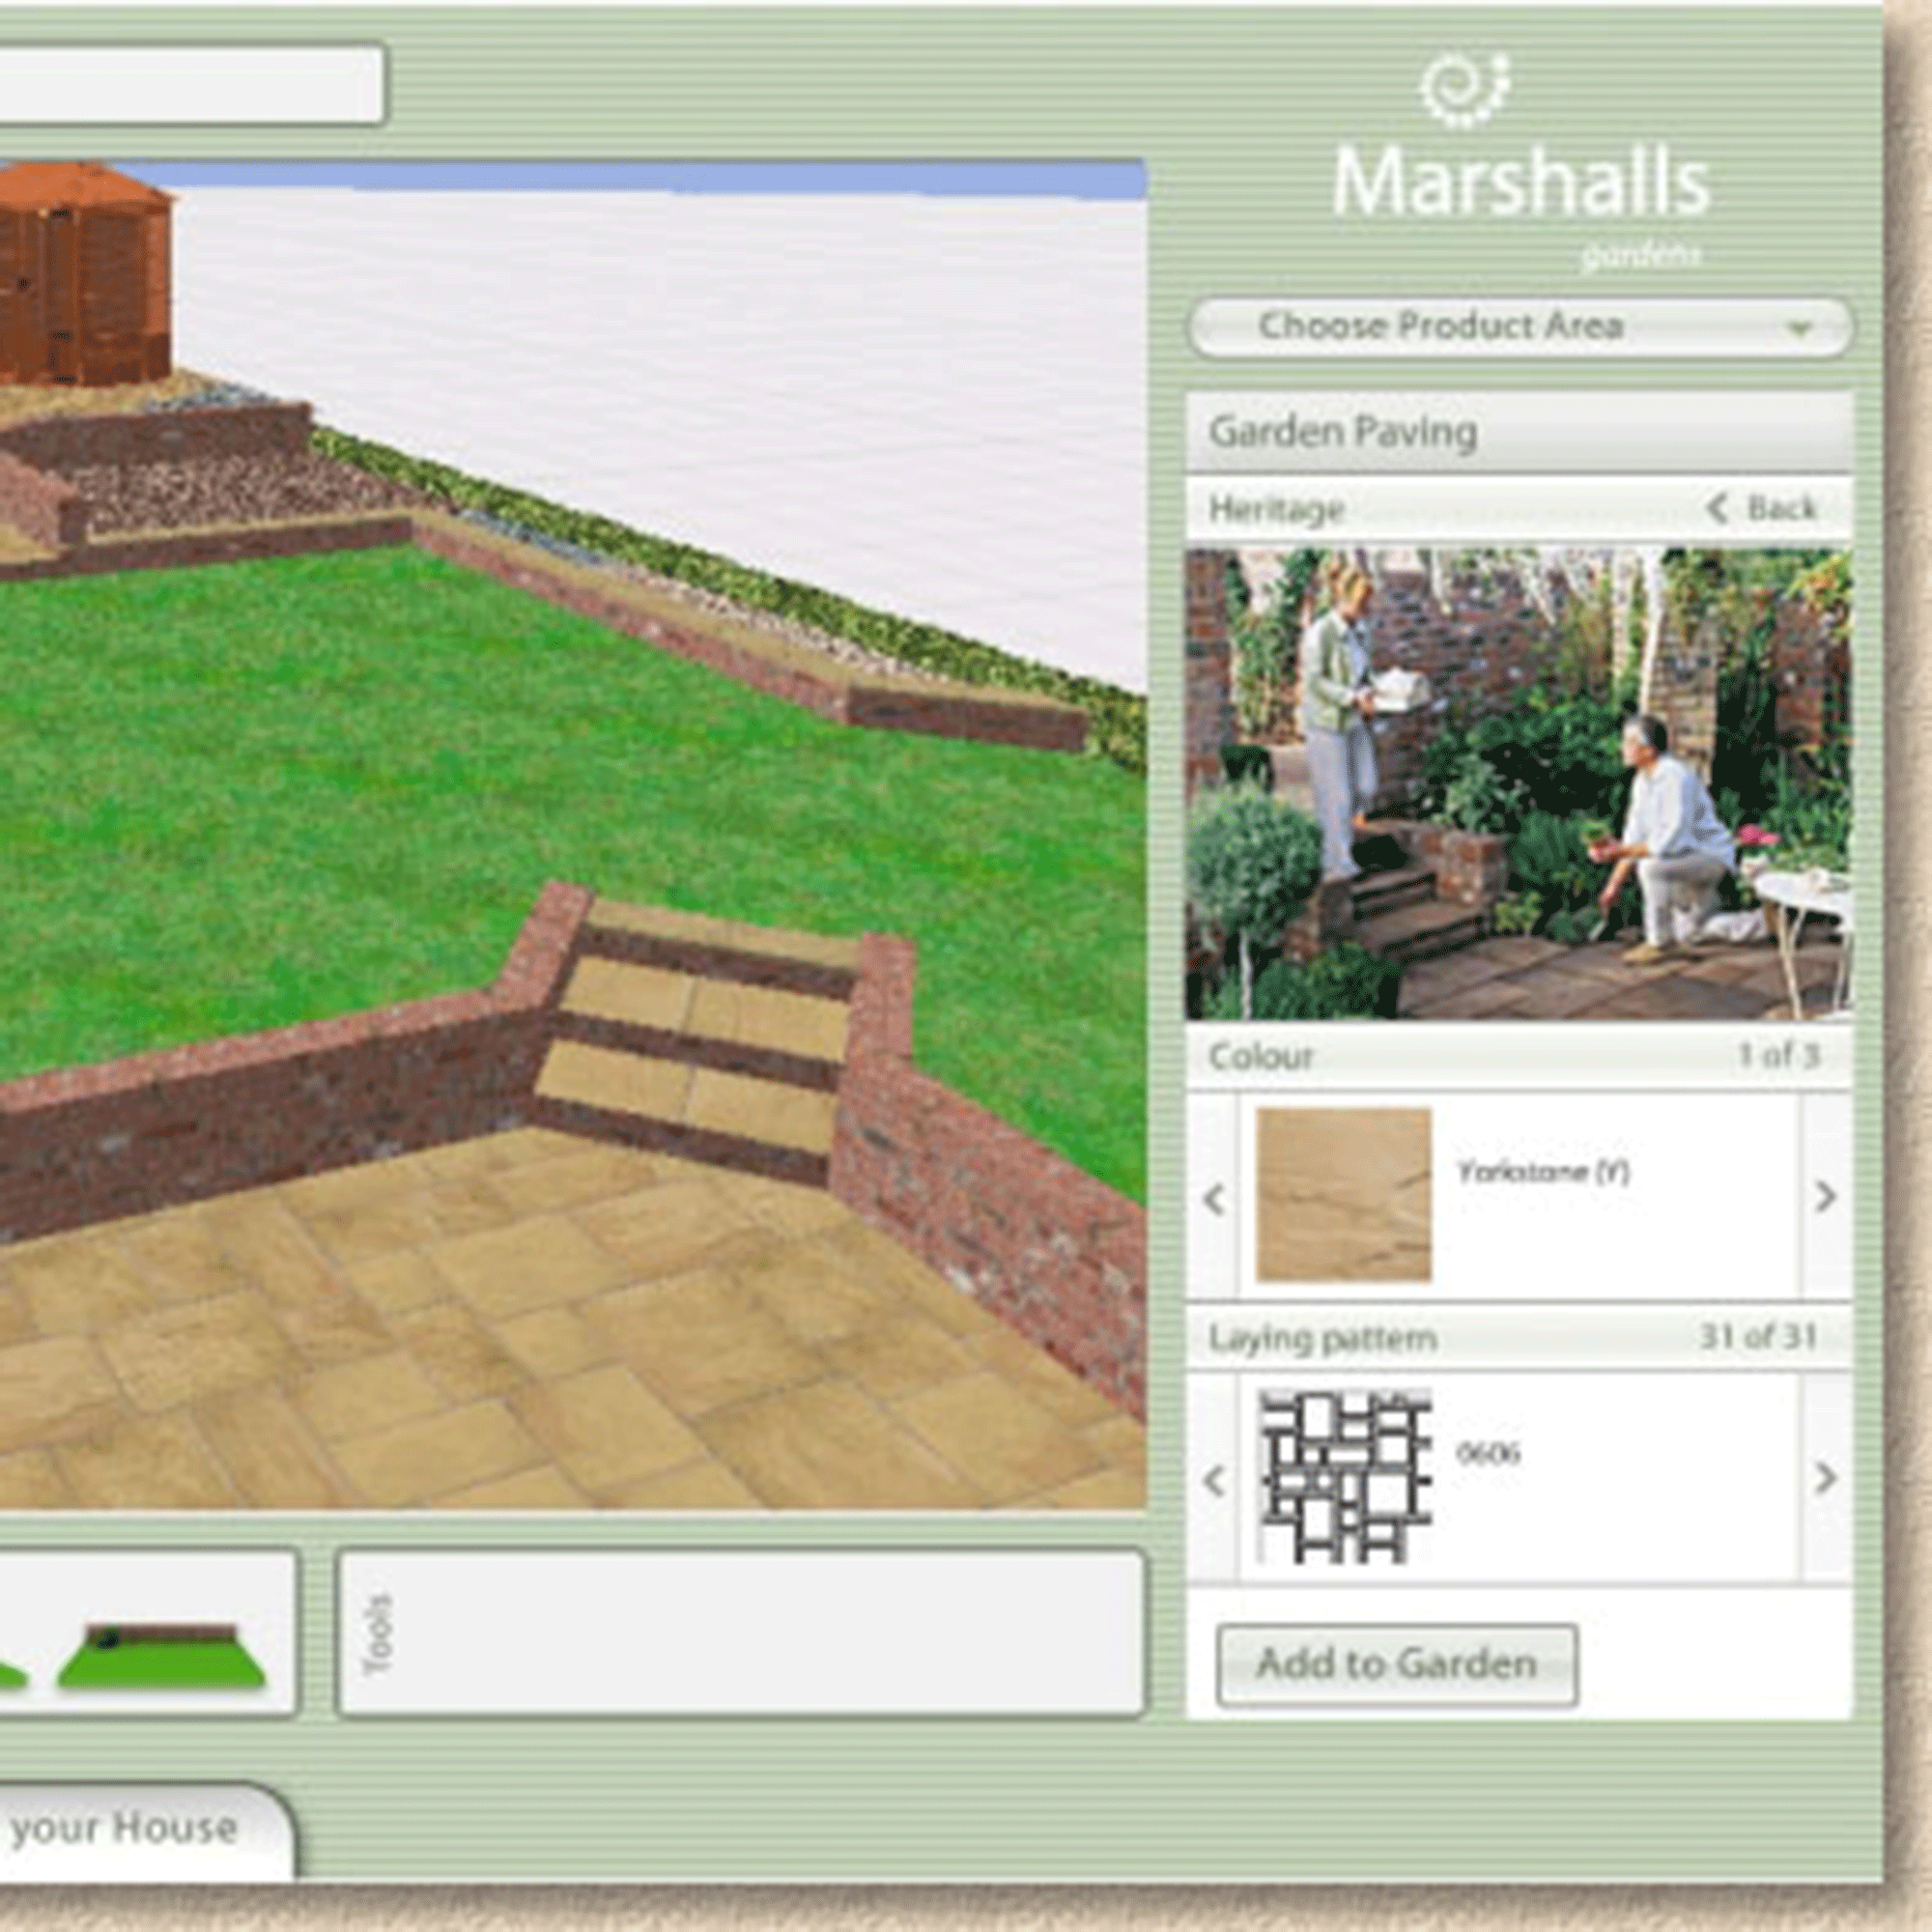 Screen shot of a garden design